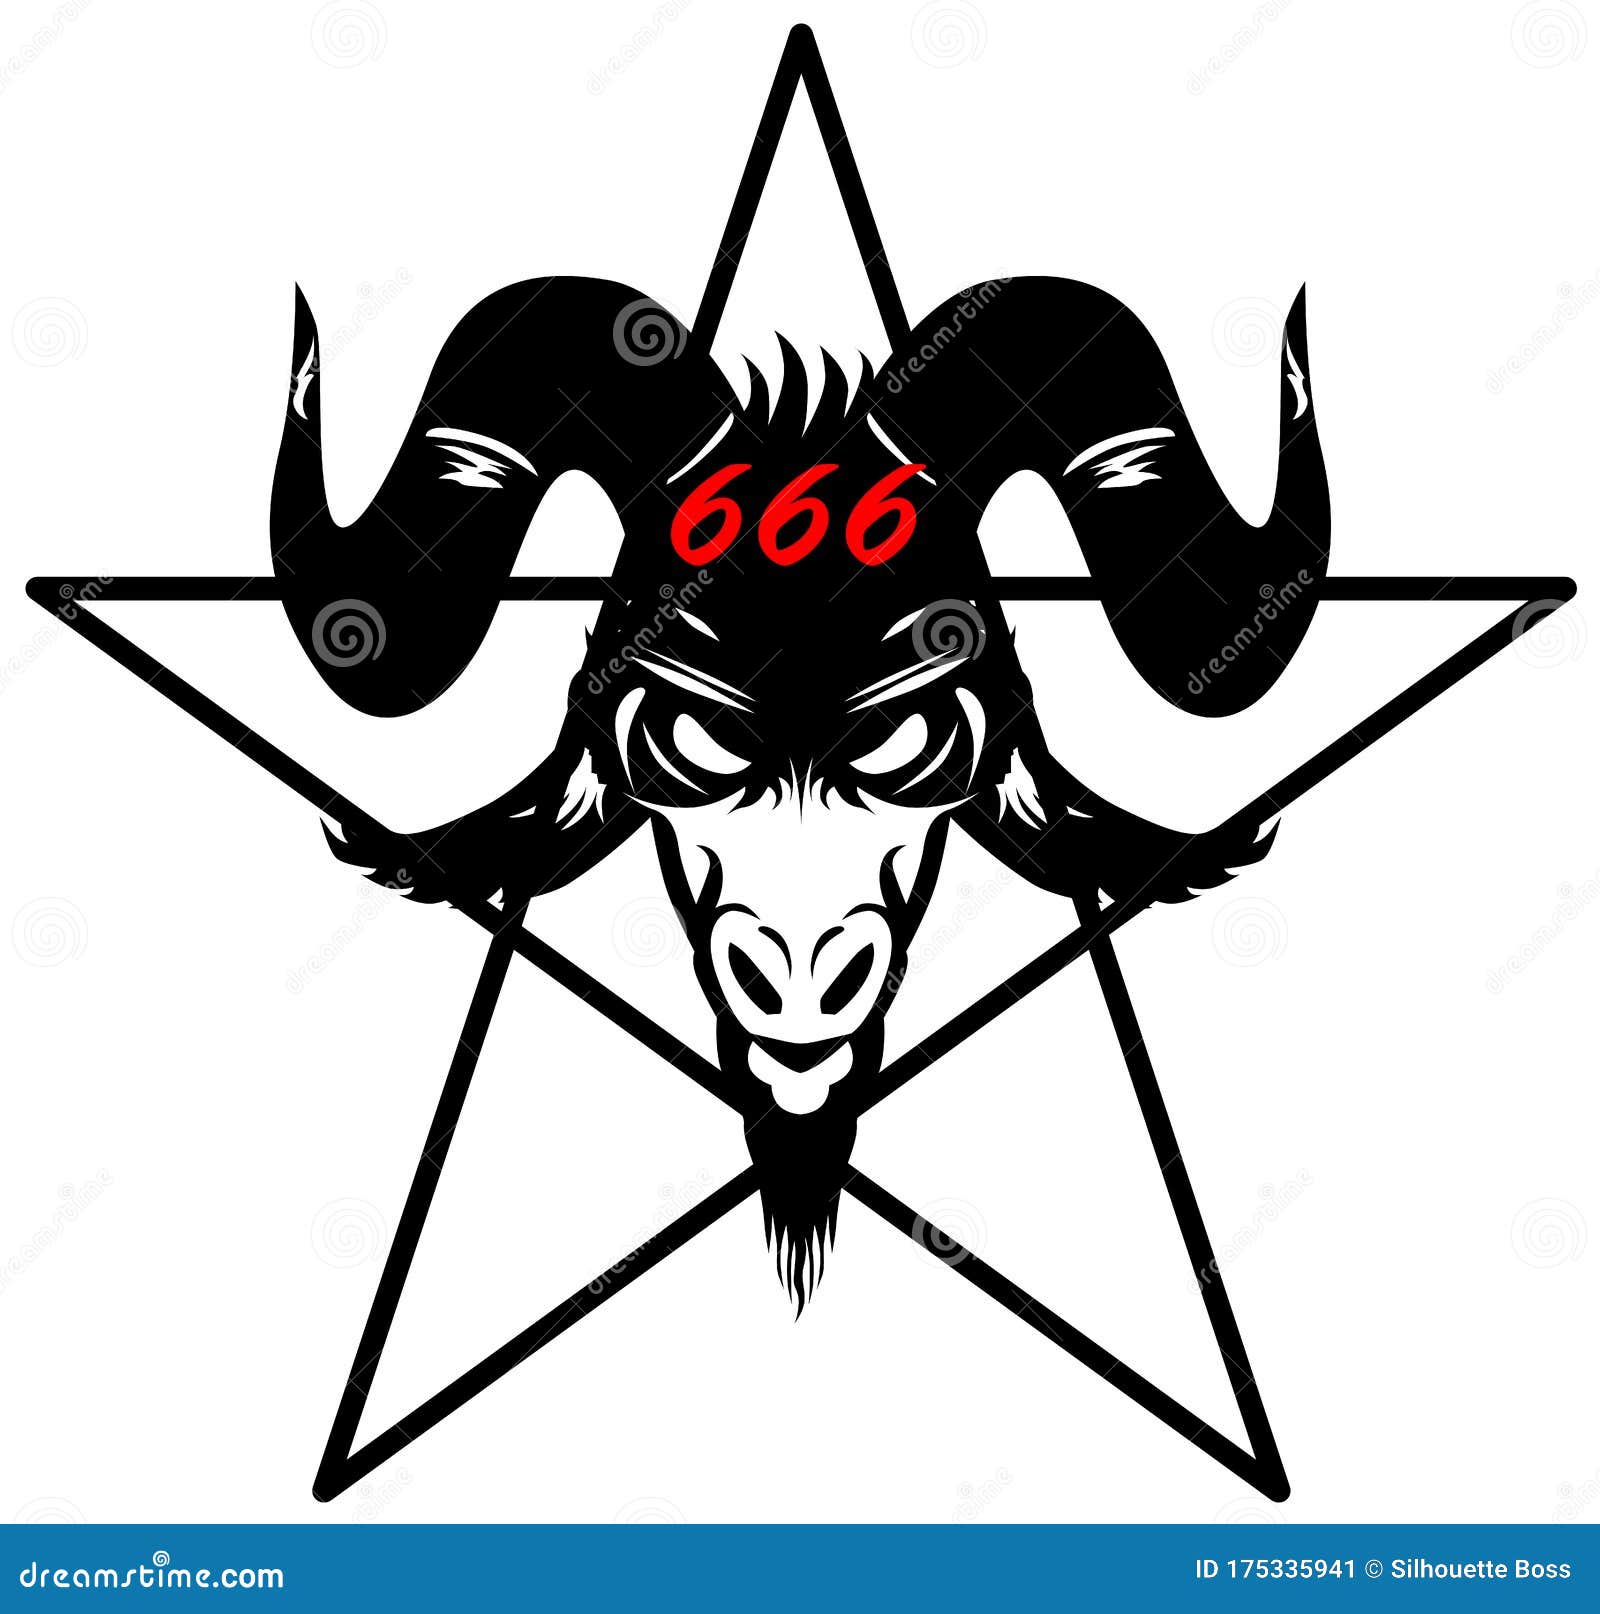 666 Number of the Beast Devil Satan Satanism Pendant Necklace 